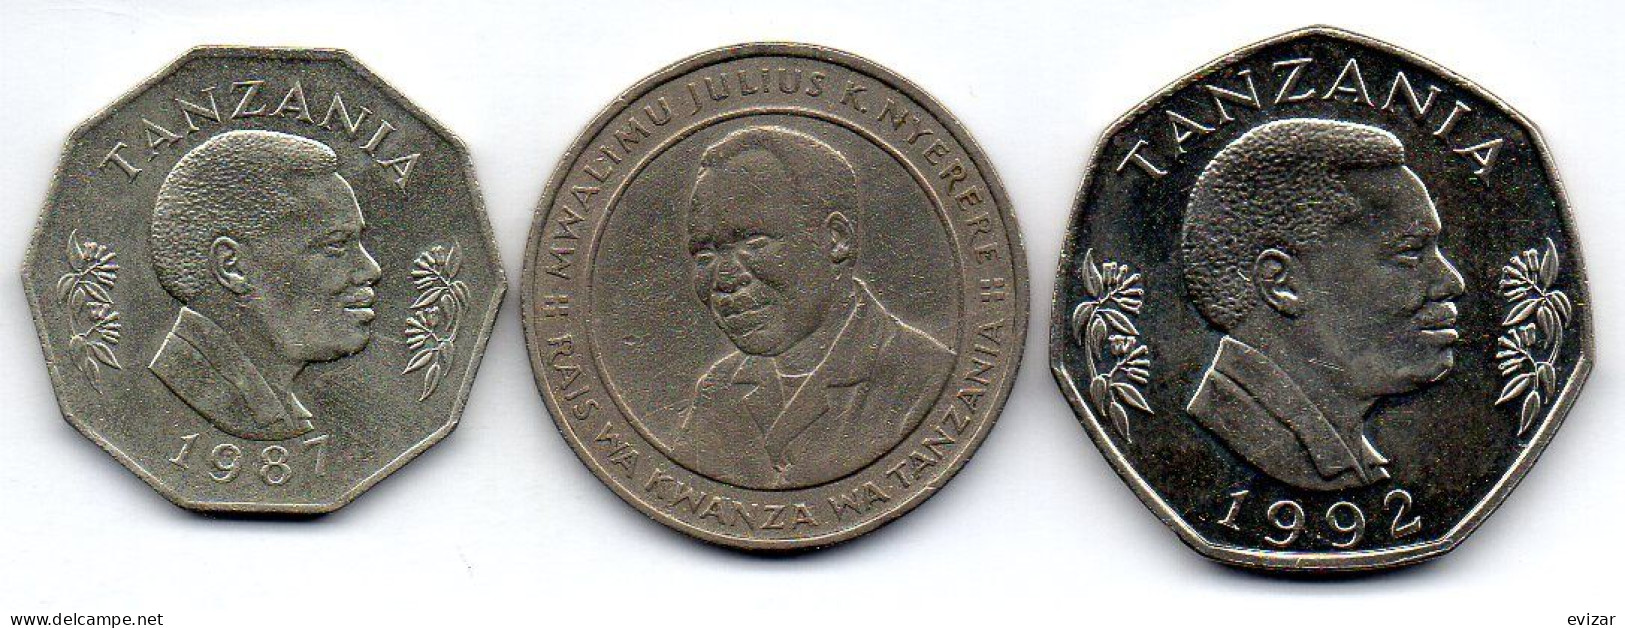 TANZANIA - Set Of Three Coins 5, 10, 20 Shillings, Copper-Nickel, Year 1987, 1992, KM # 23, 20, 27.2 - Tanzania